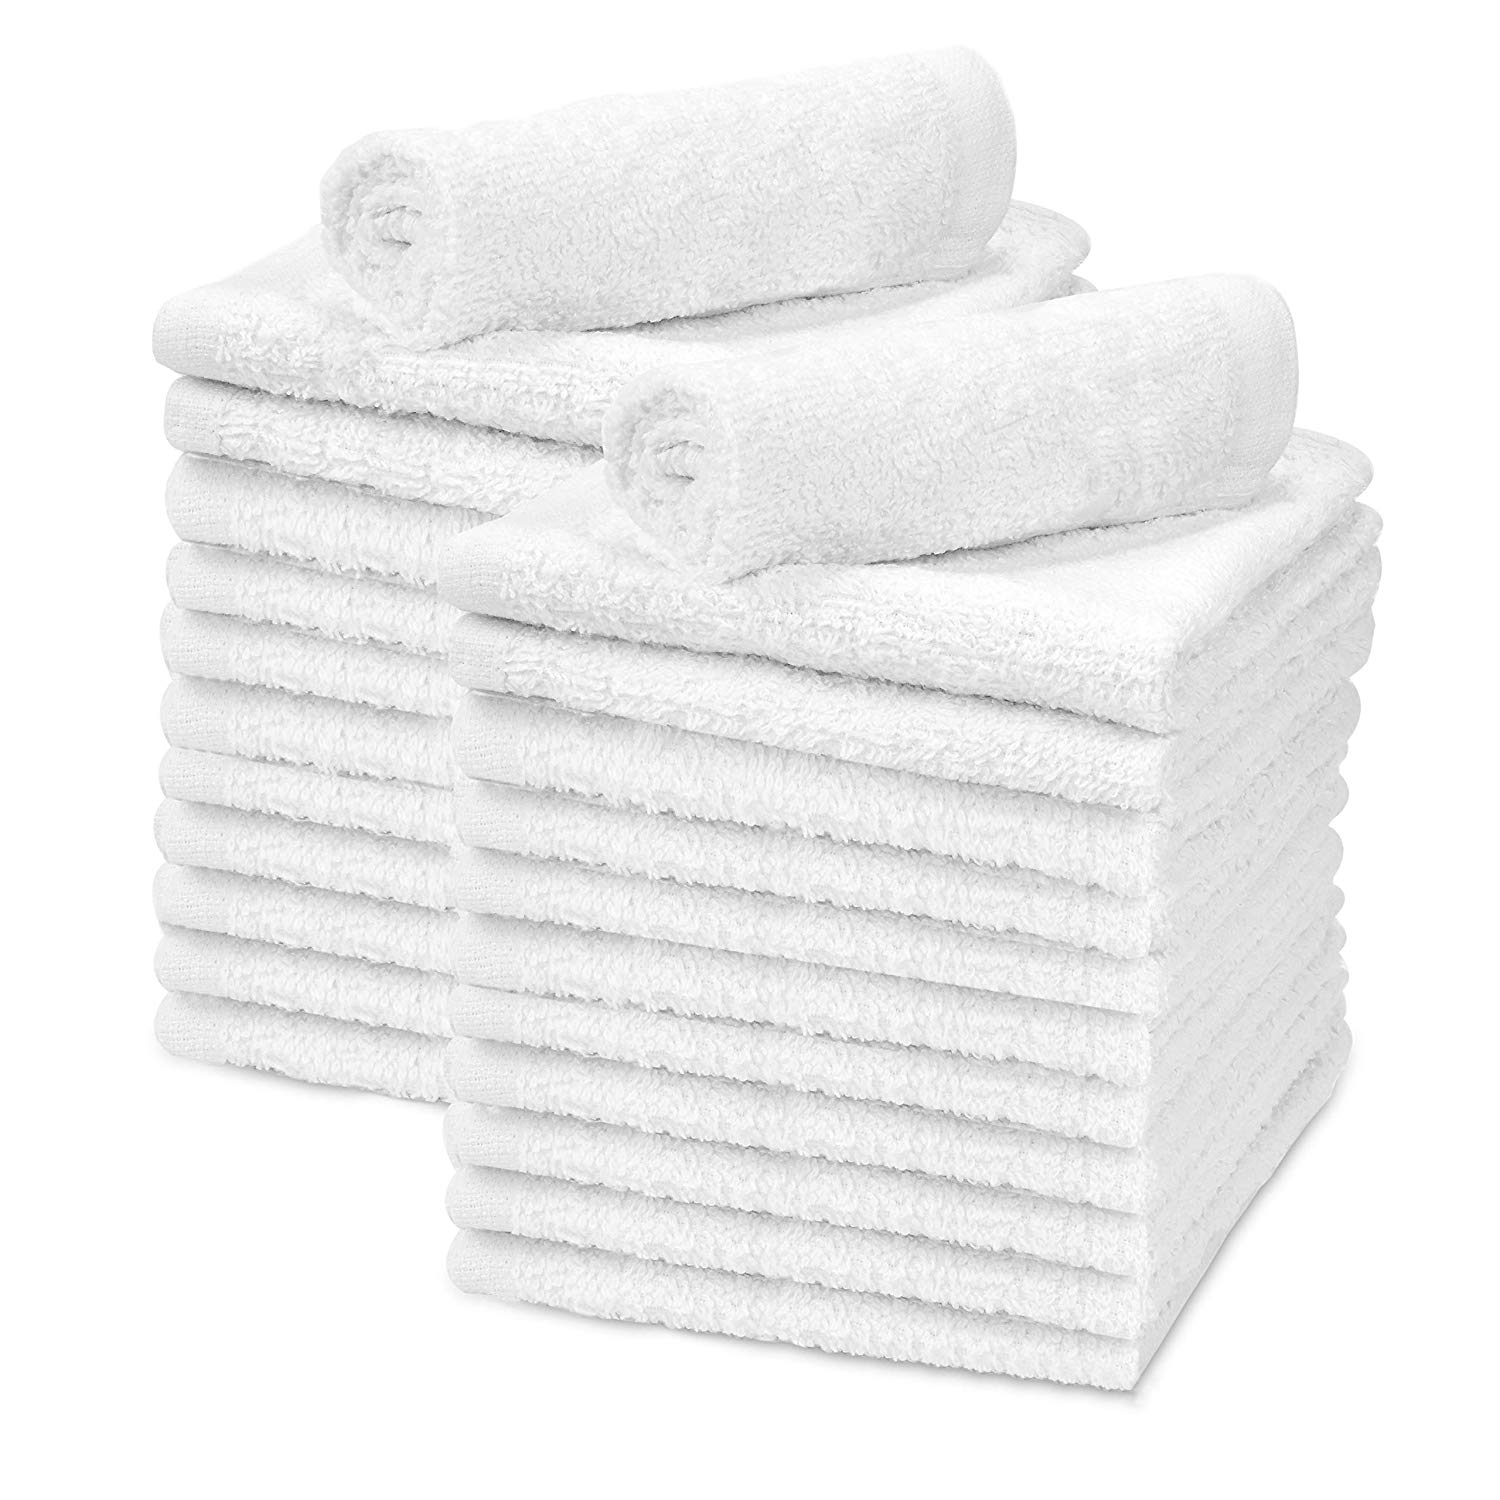 12 PIECE LUSH VELOUR WHITE HAND TOWELS 16 X 27 –